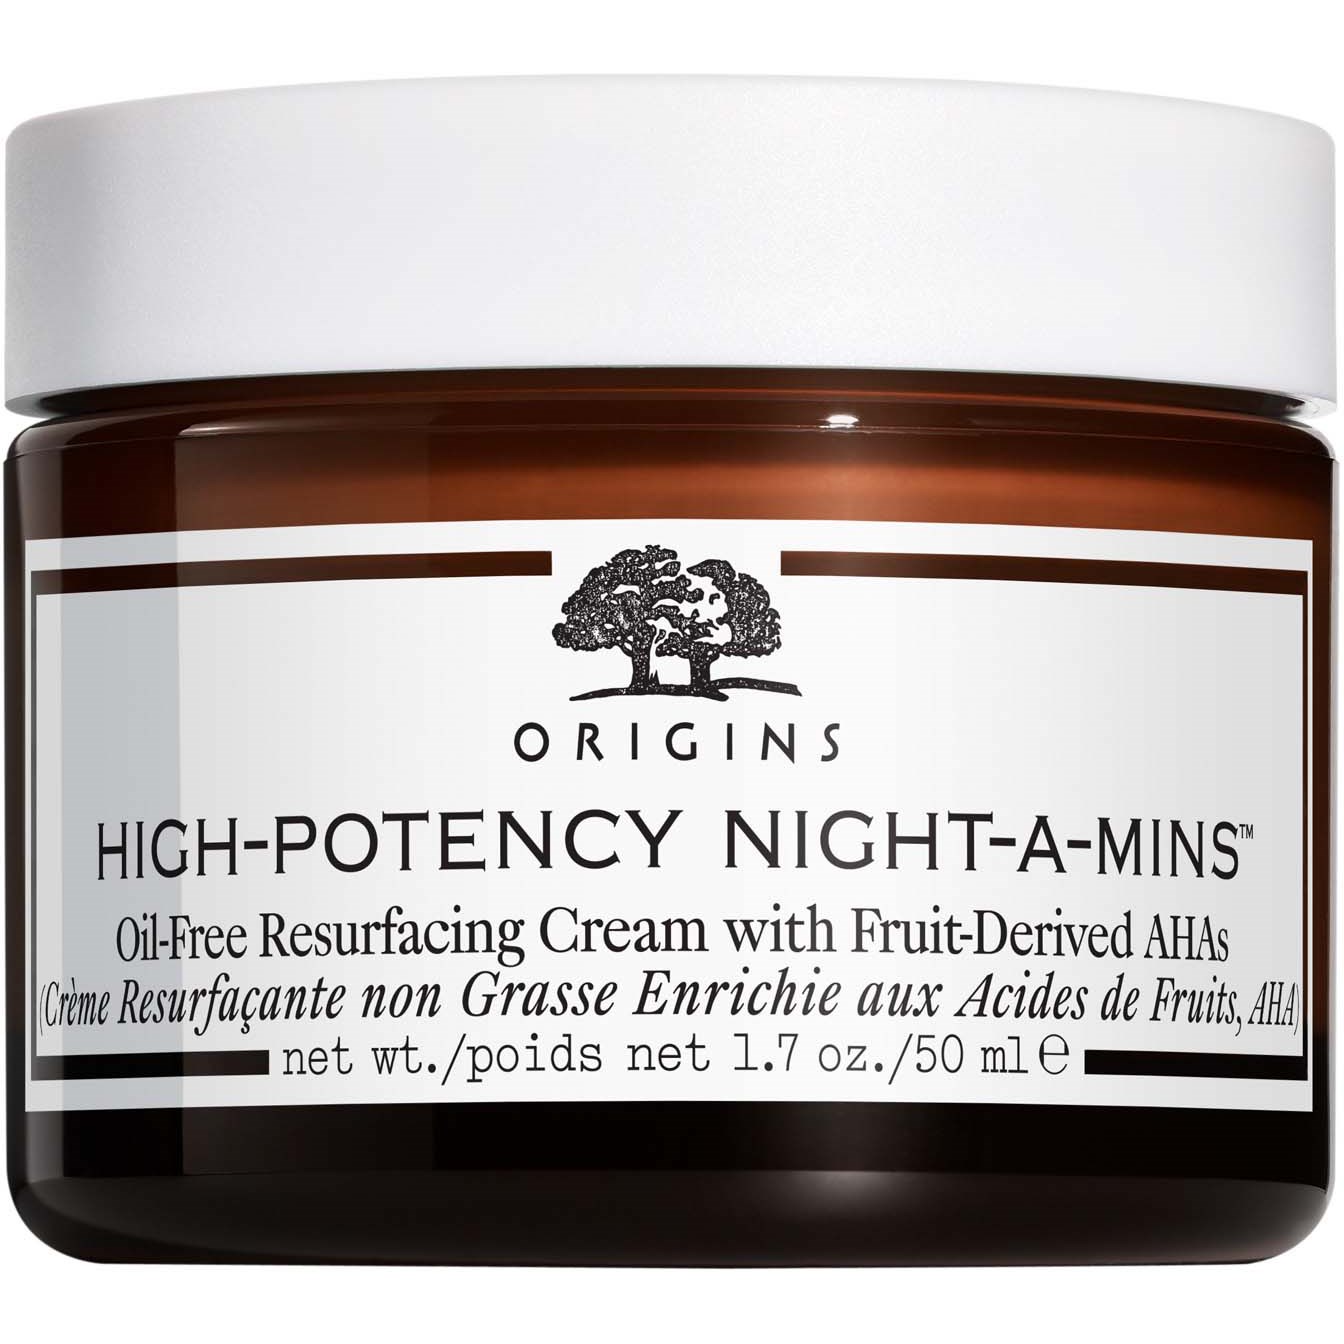 Origins High-Potency Night-A-Mins™ Oil-Free Resurfacing Cream with Fru